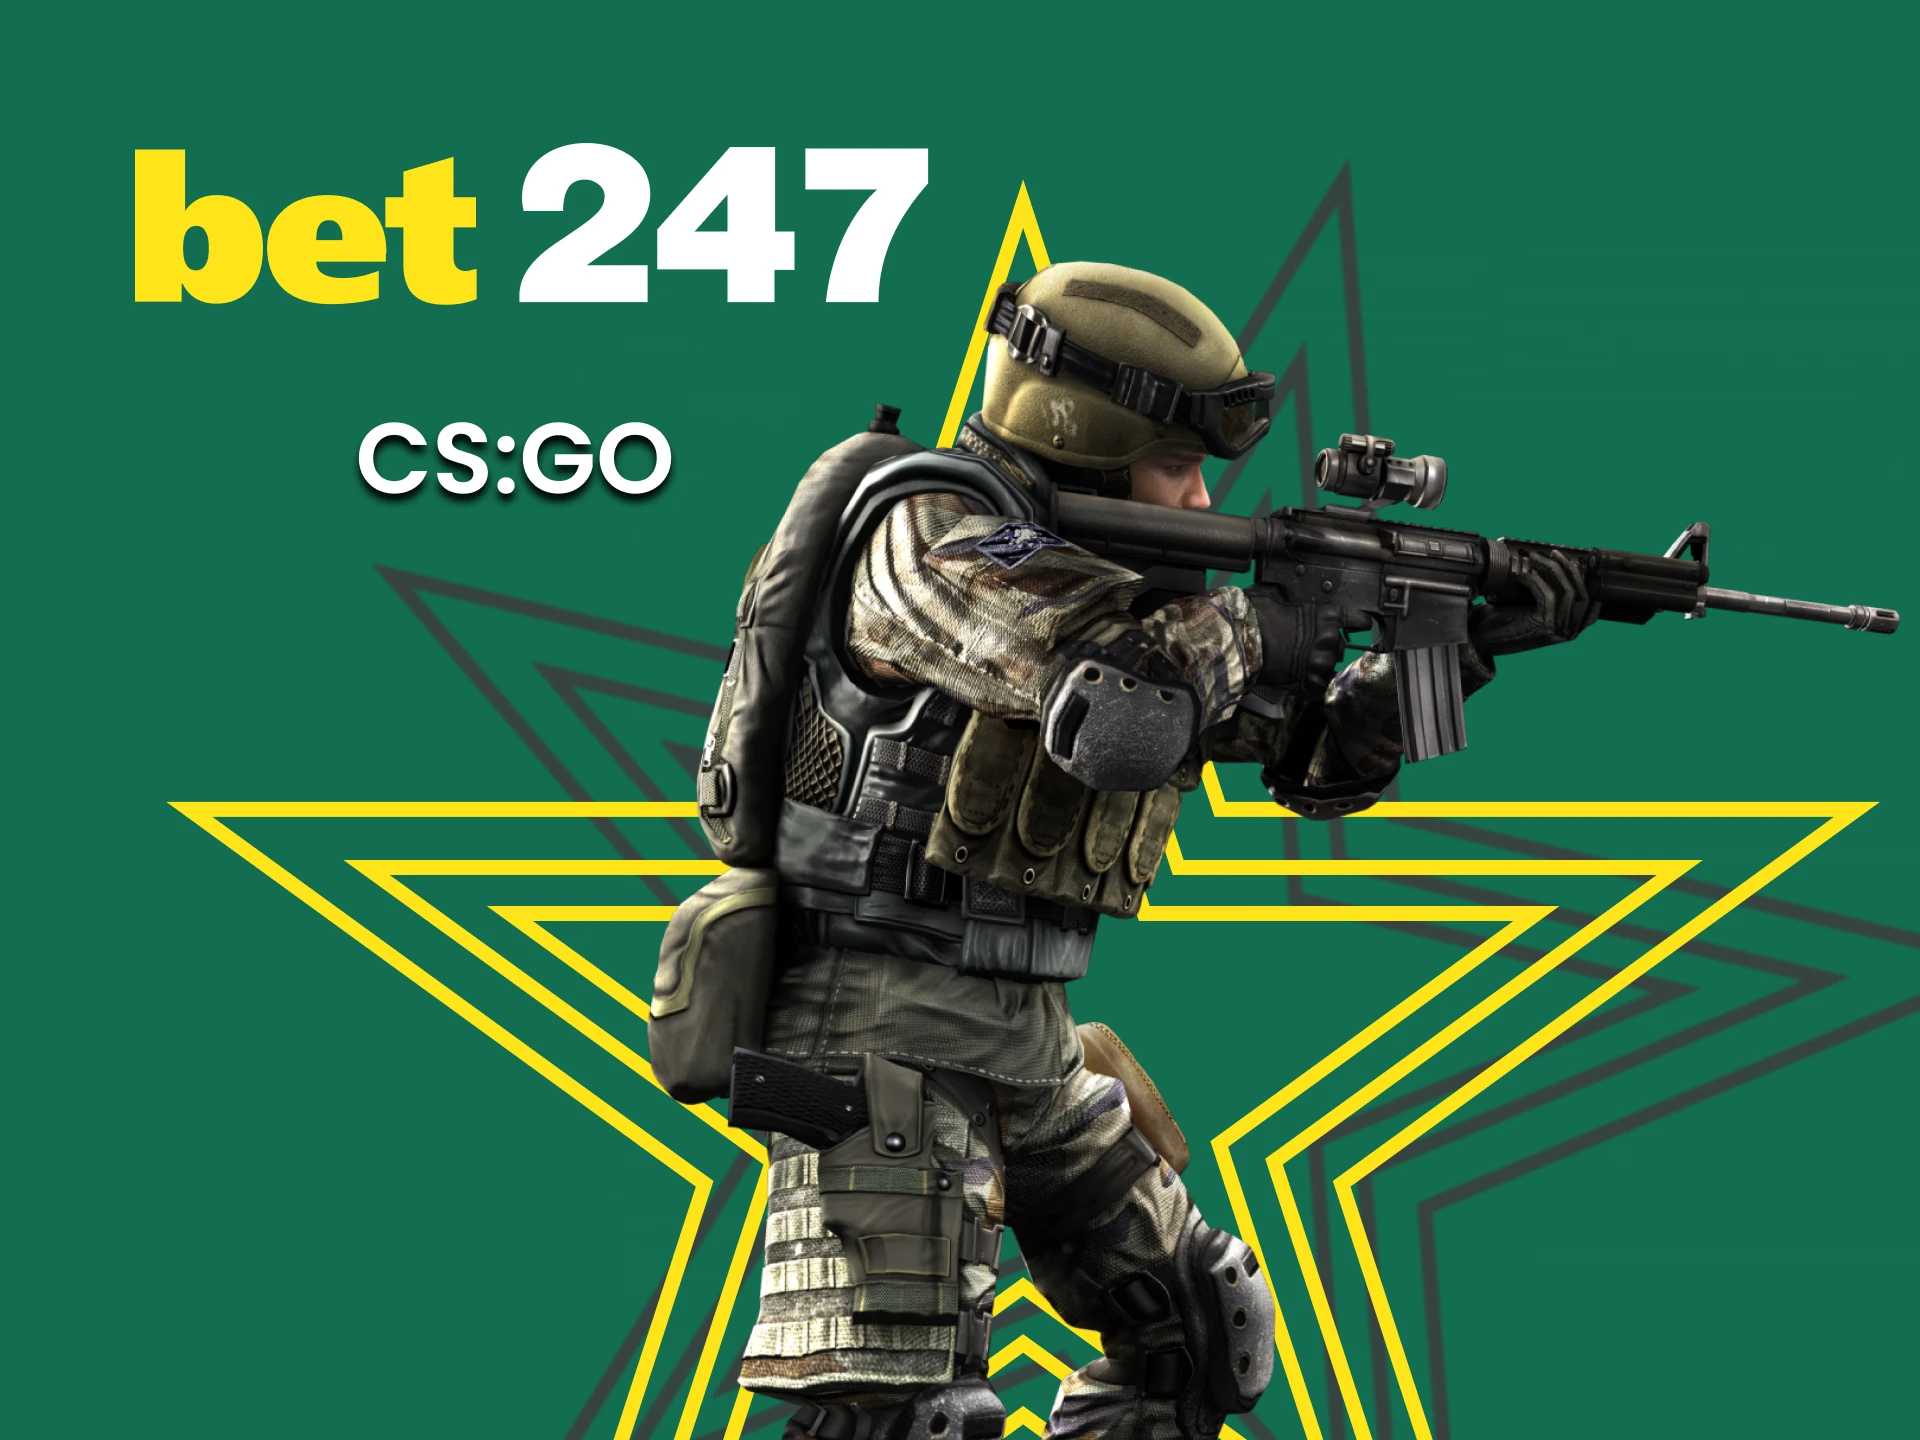 Bet on CS:GO with Bet247.